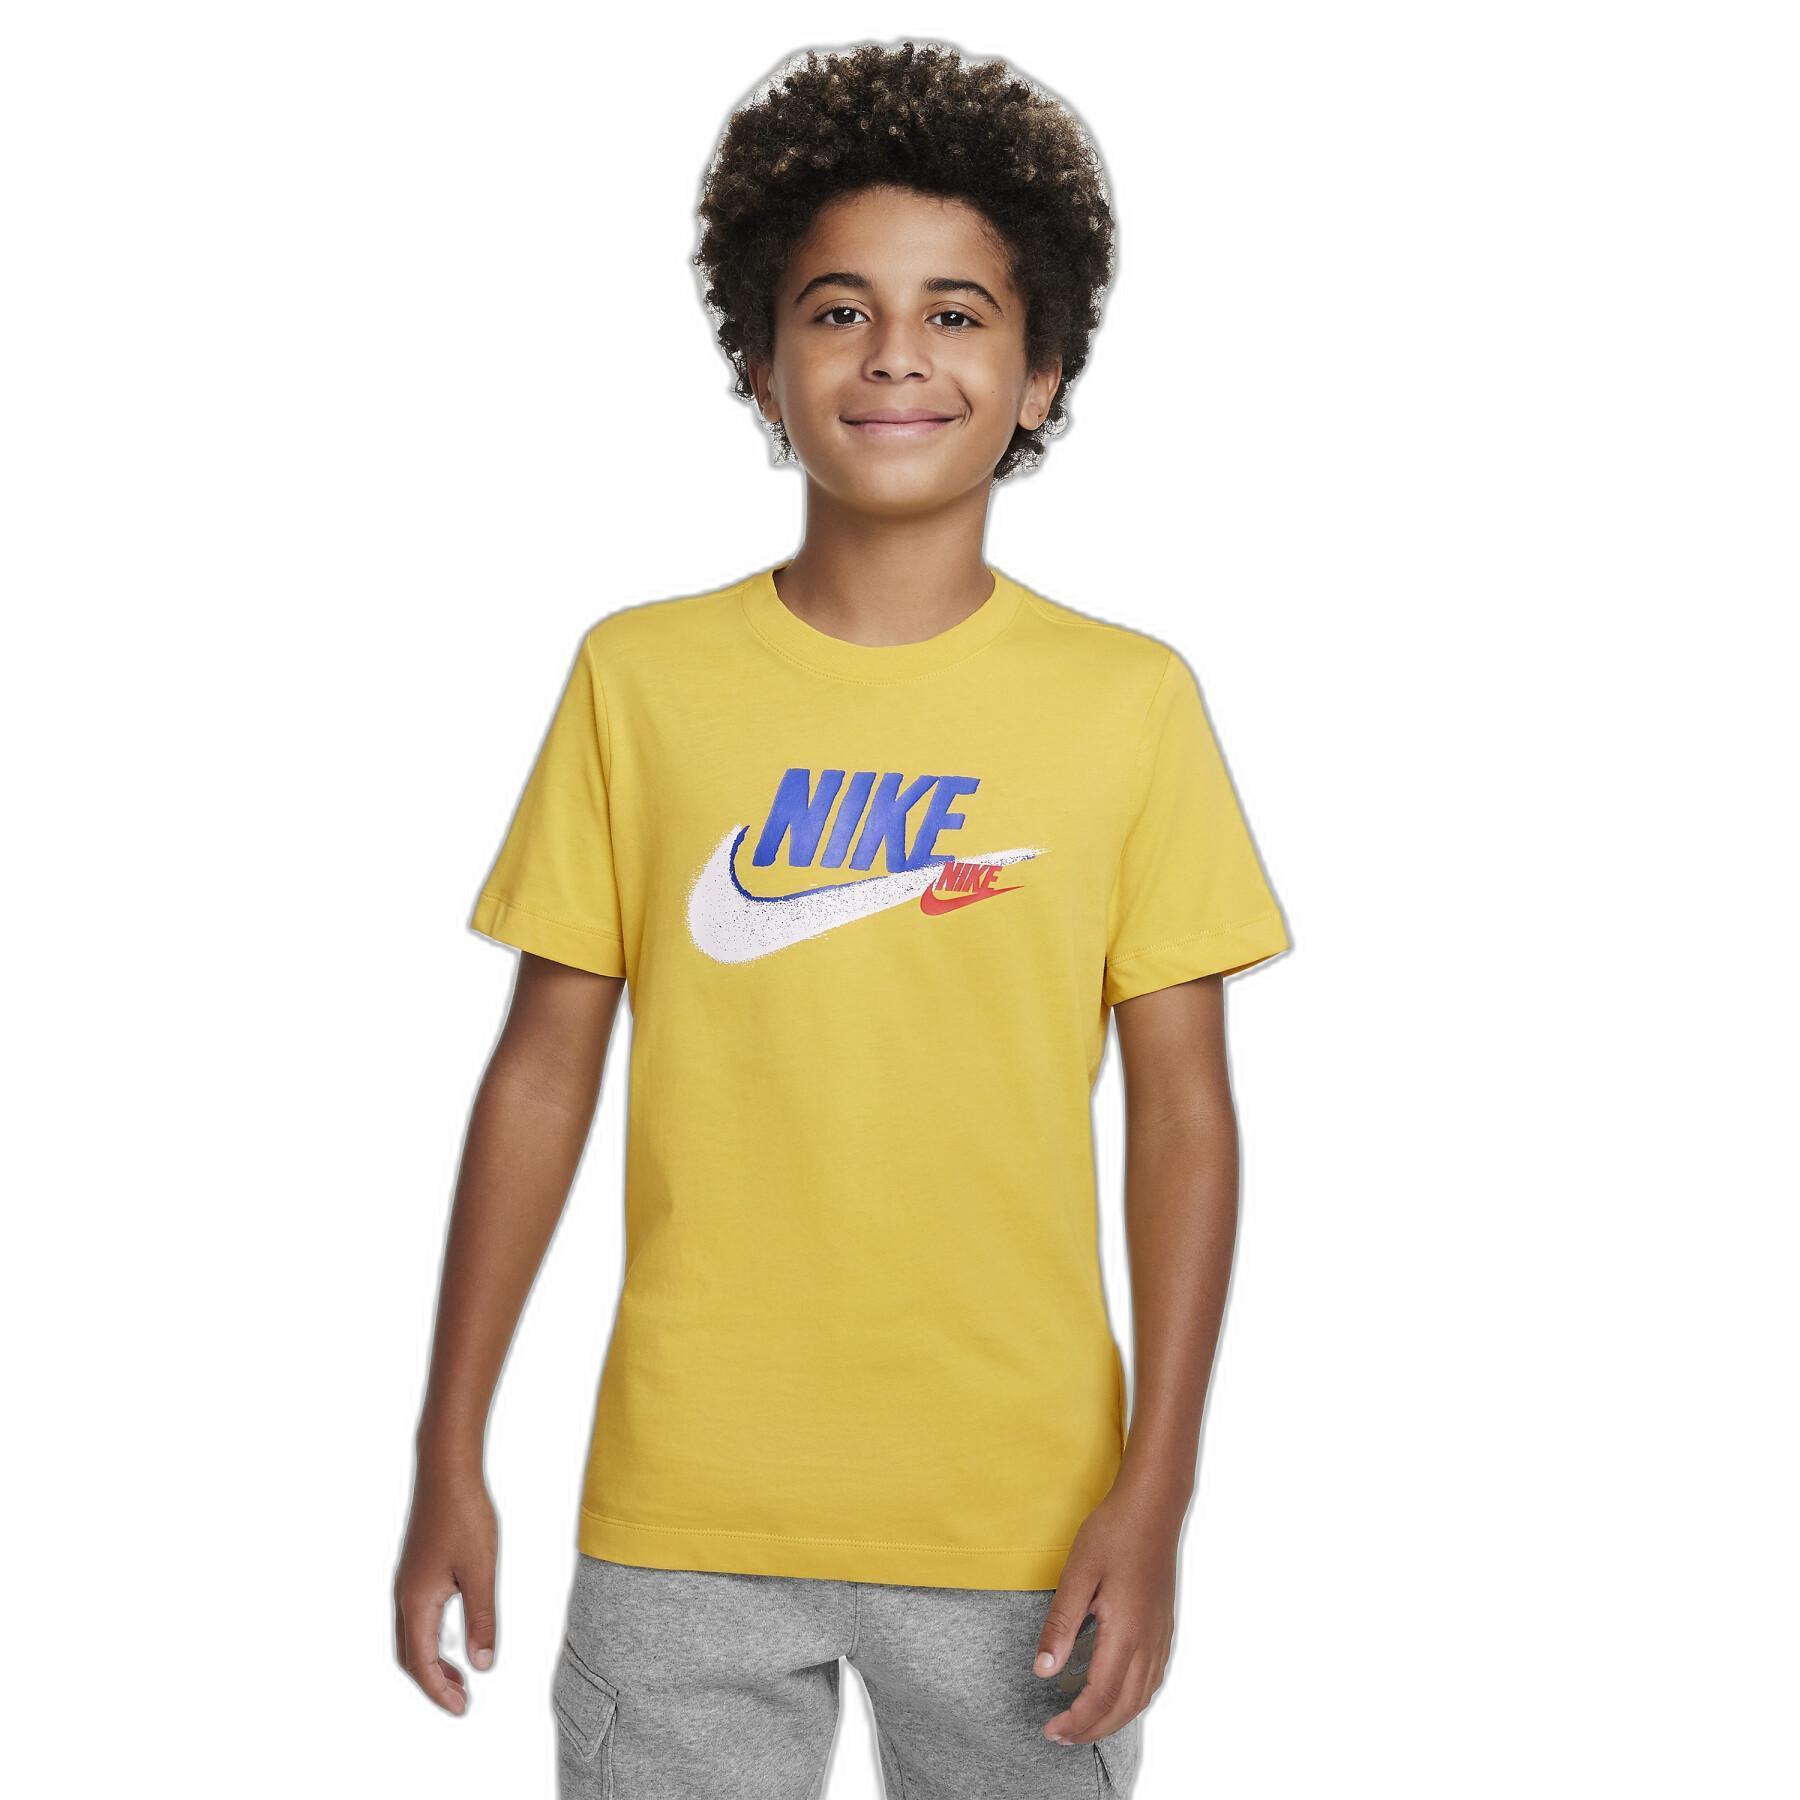 Camiseta infantil Nike Standard Issue